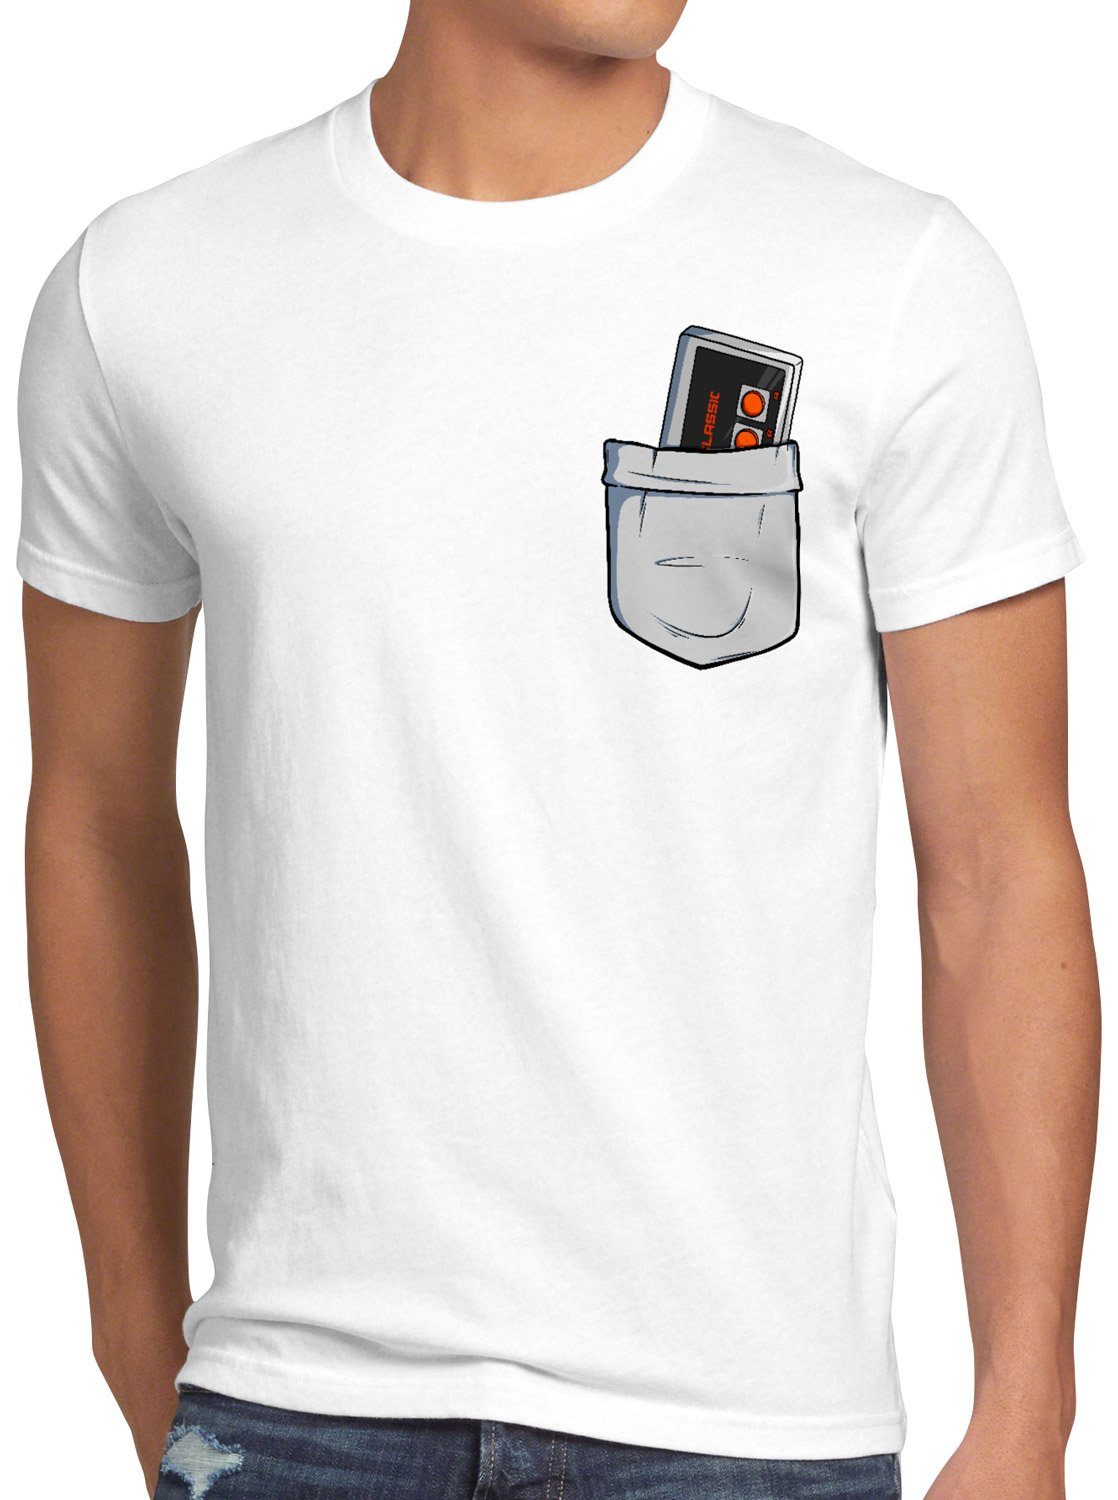 style3 Print-Shirt Herren T-Shirt Brusttasche NES konsole classic 8-Bit